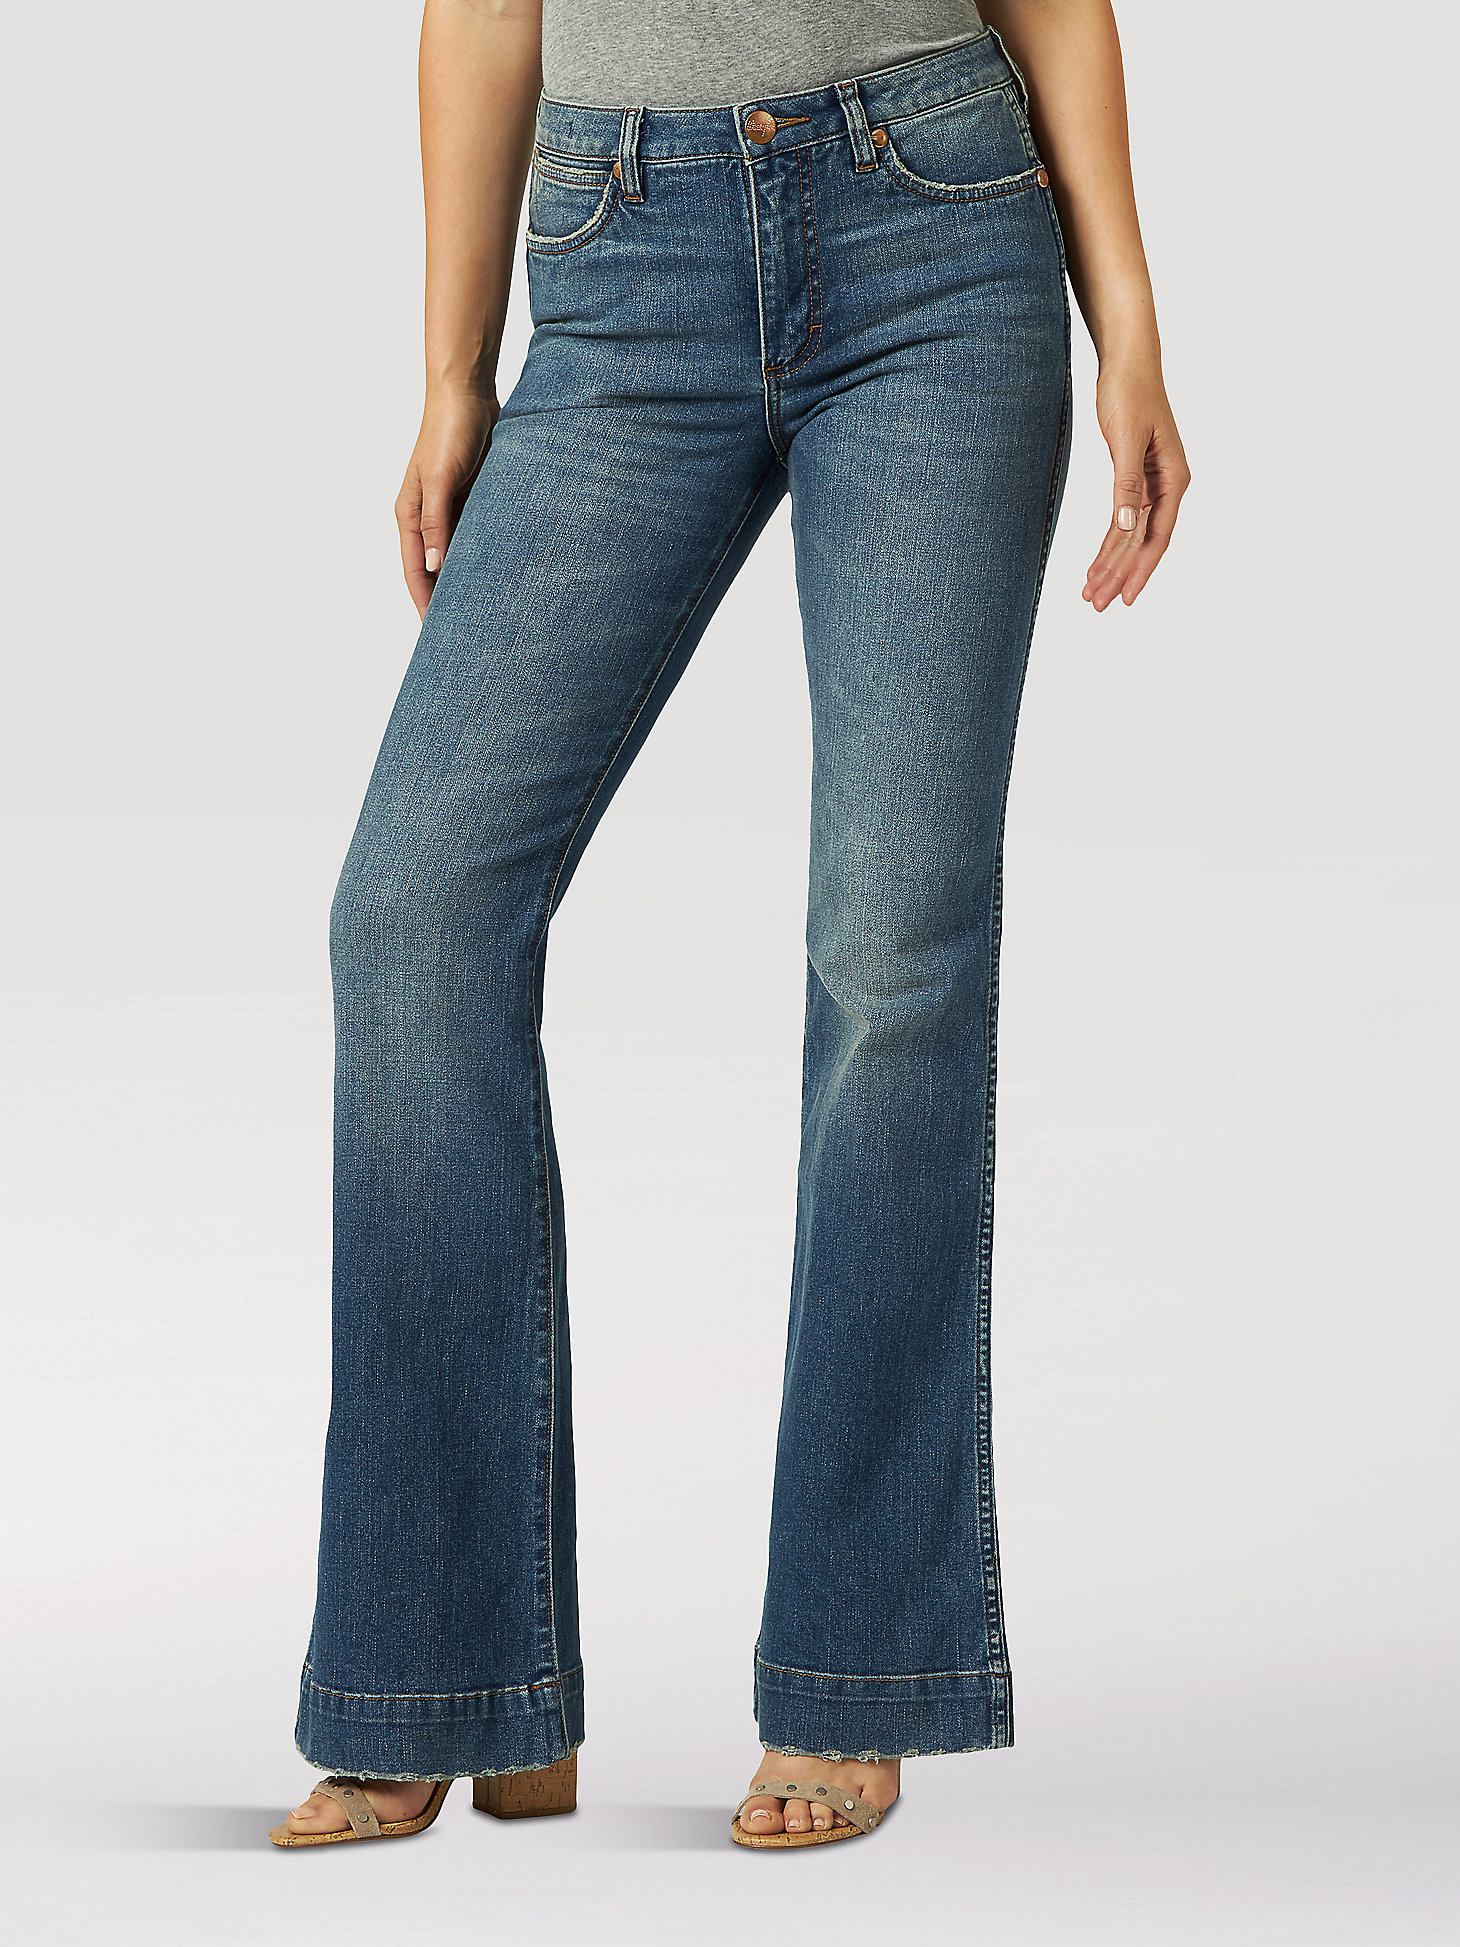 Women's Wrangler Retro® Bailey High Rise Trouser Jean in Shelby alternative view 2